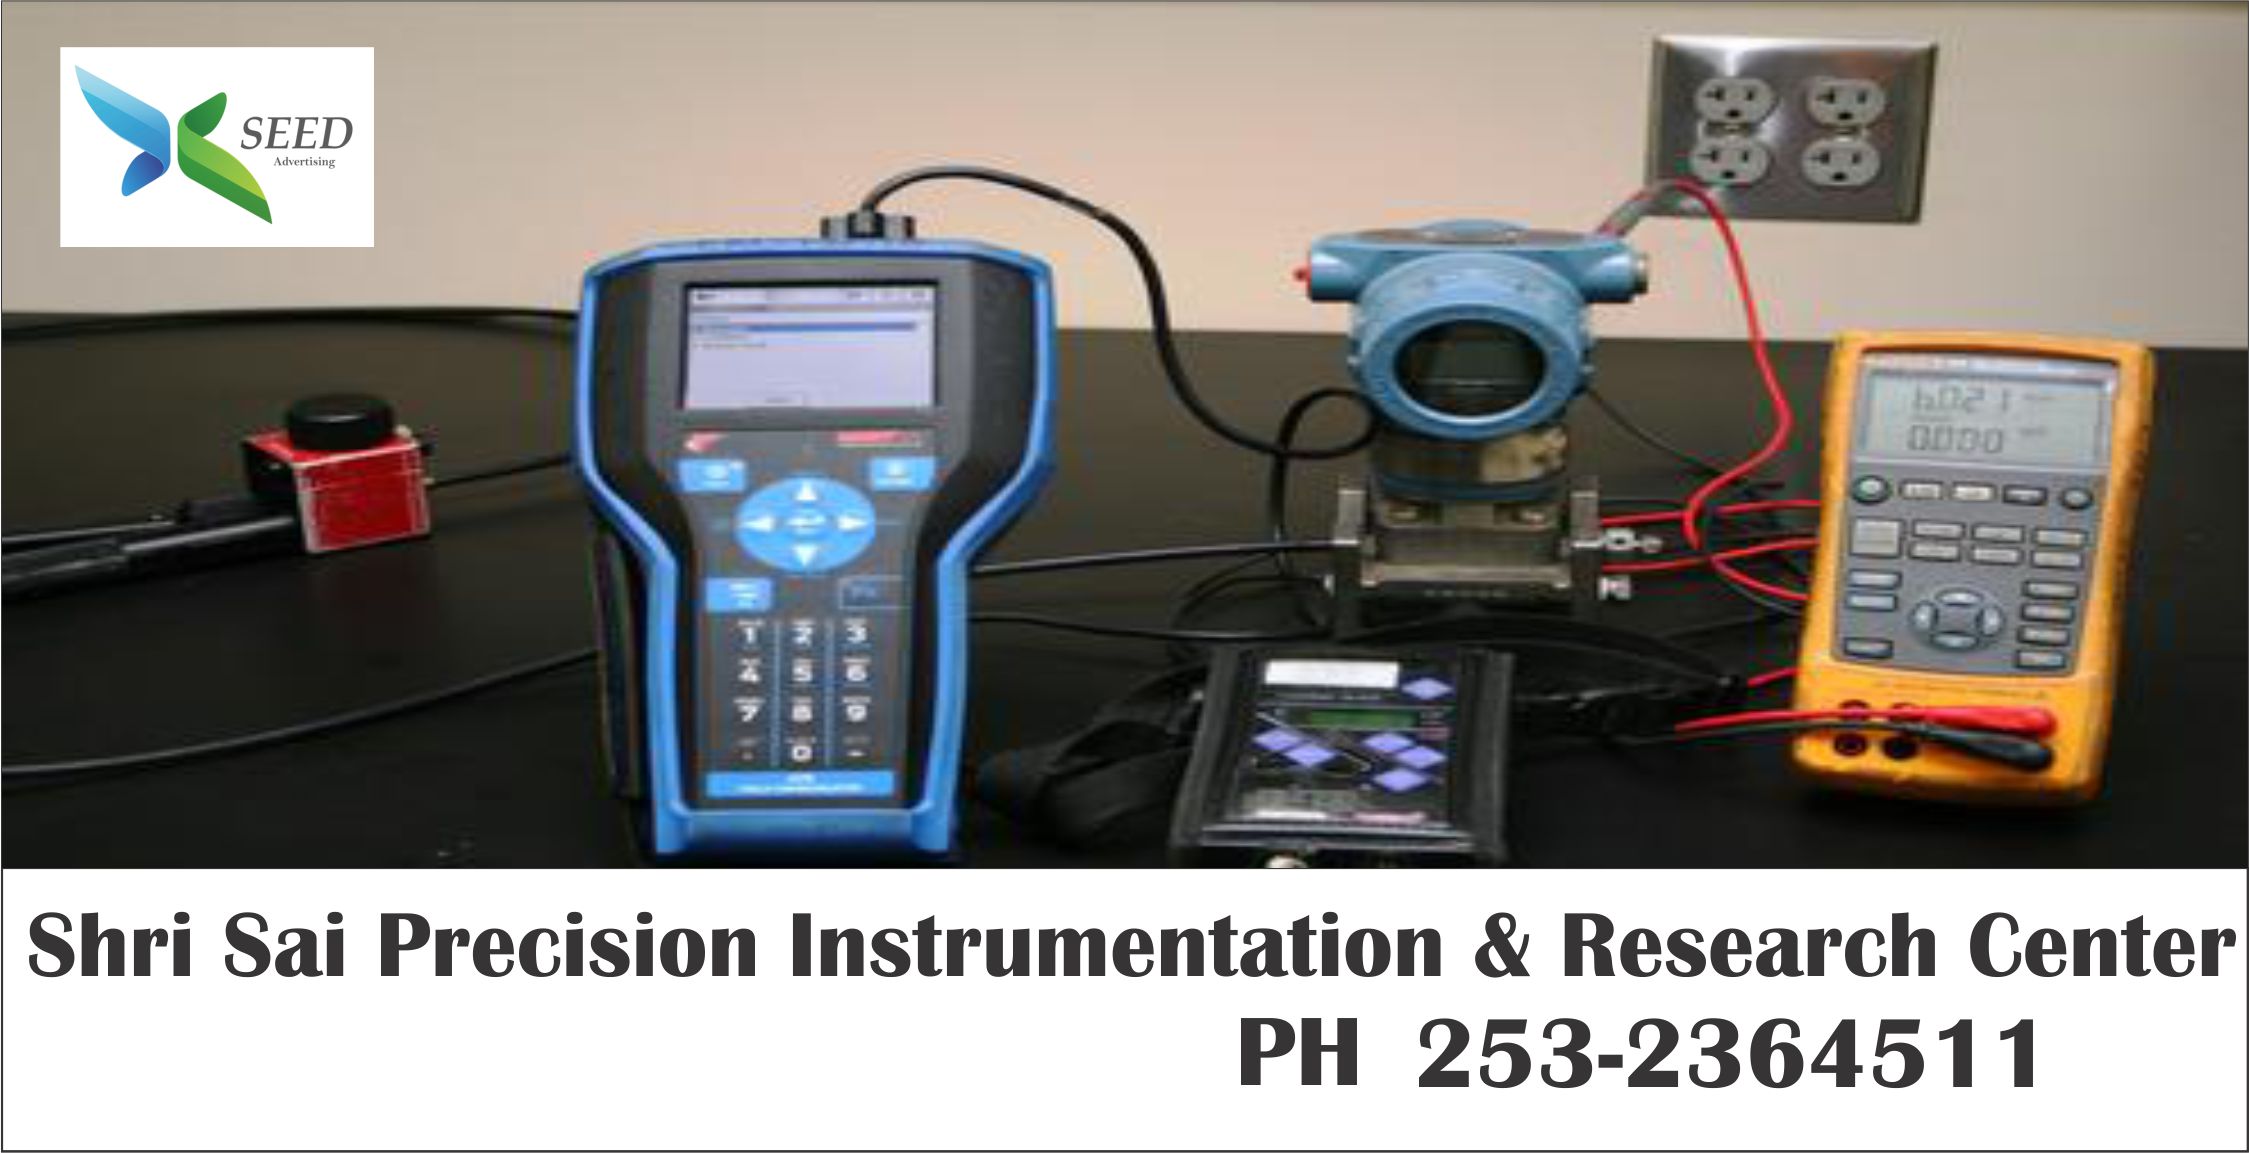 Shri Sai Precision Instrumentation & Research Center